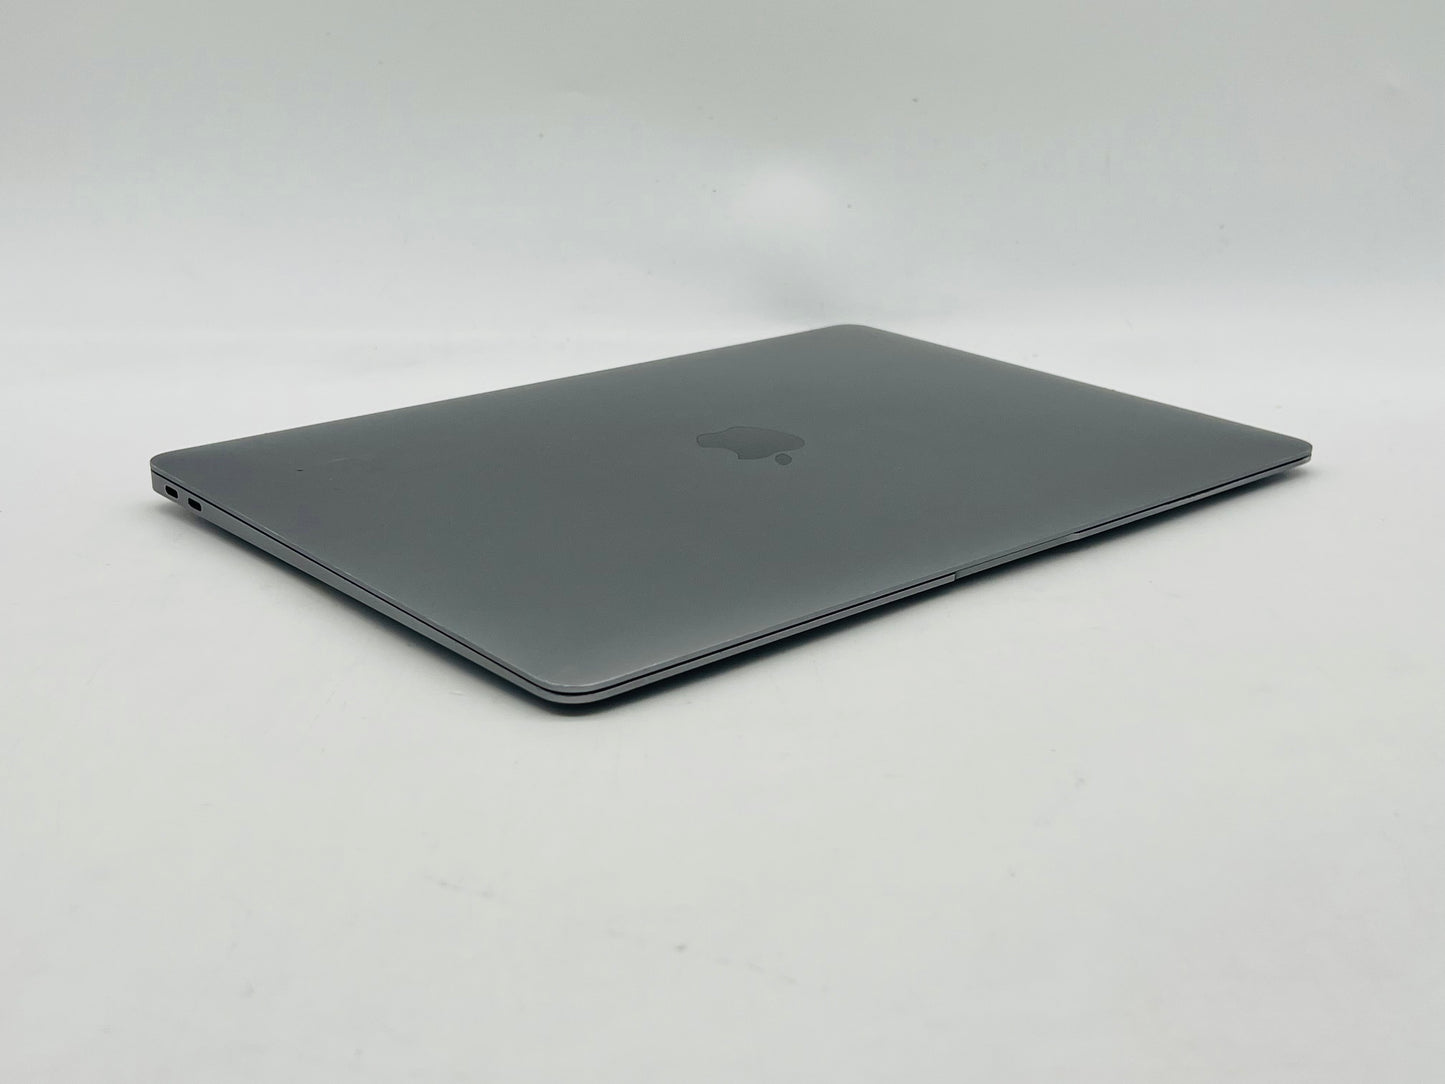 Apple 2018 Macbook Air 1.6GHz i5 16GB RAM 128GBSSD IUG617 1536MB - Good